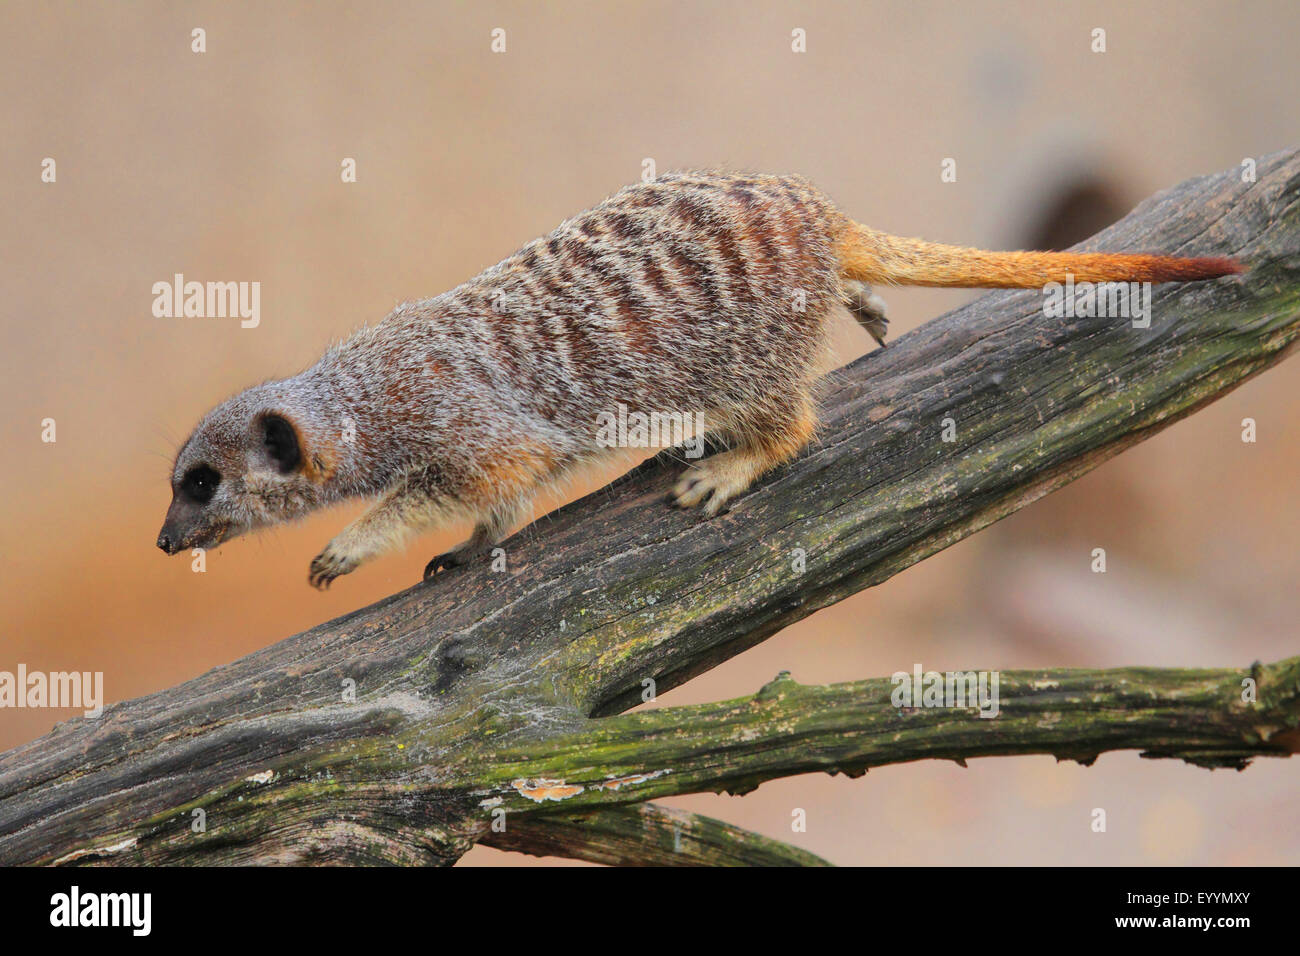 Suricate, sottile-tailed meerkat (Suricata suricatta), percorrendo a piedi un ramoscello Foto Stock